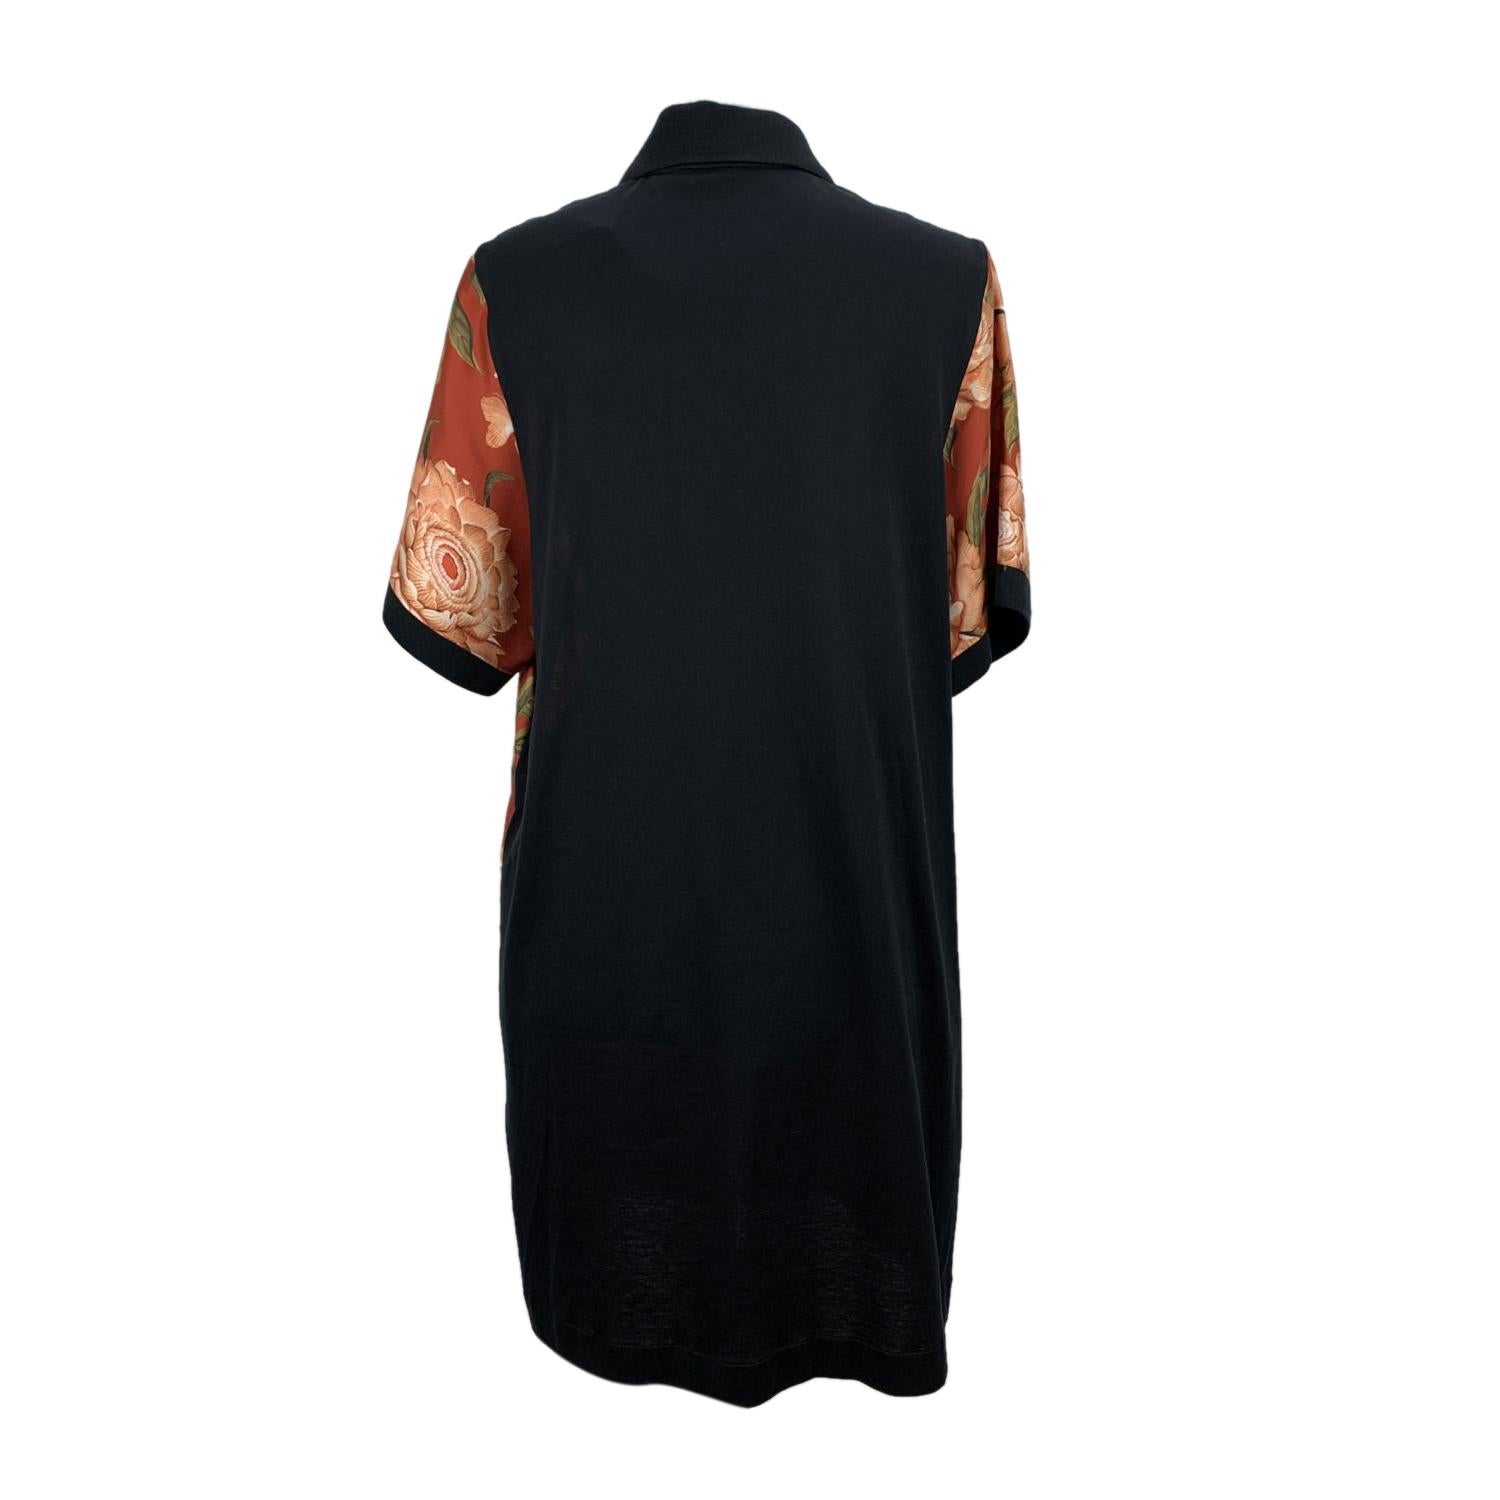 Women's Salvatore Ferragamo Floral Silk and Cotton T-Shirt Dress Size 42 IT